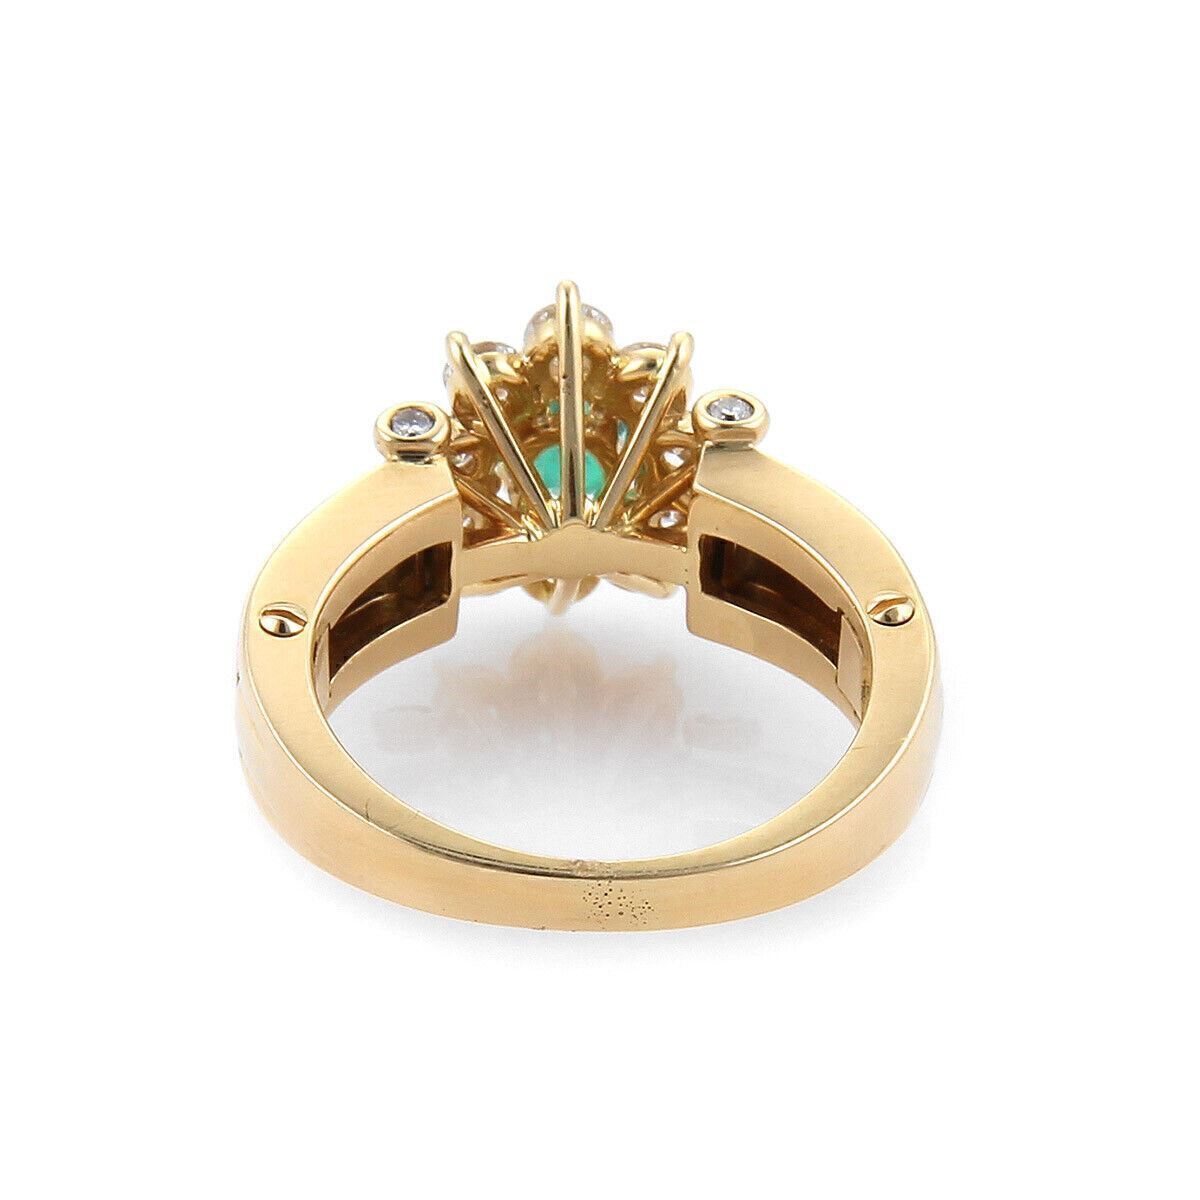 Korloff Diamonds & Emerald Enamel 18k Gold Cocktail Ring